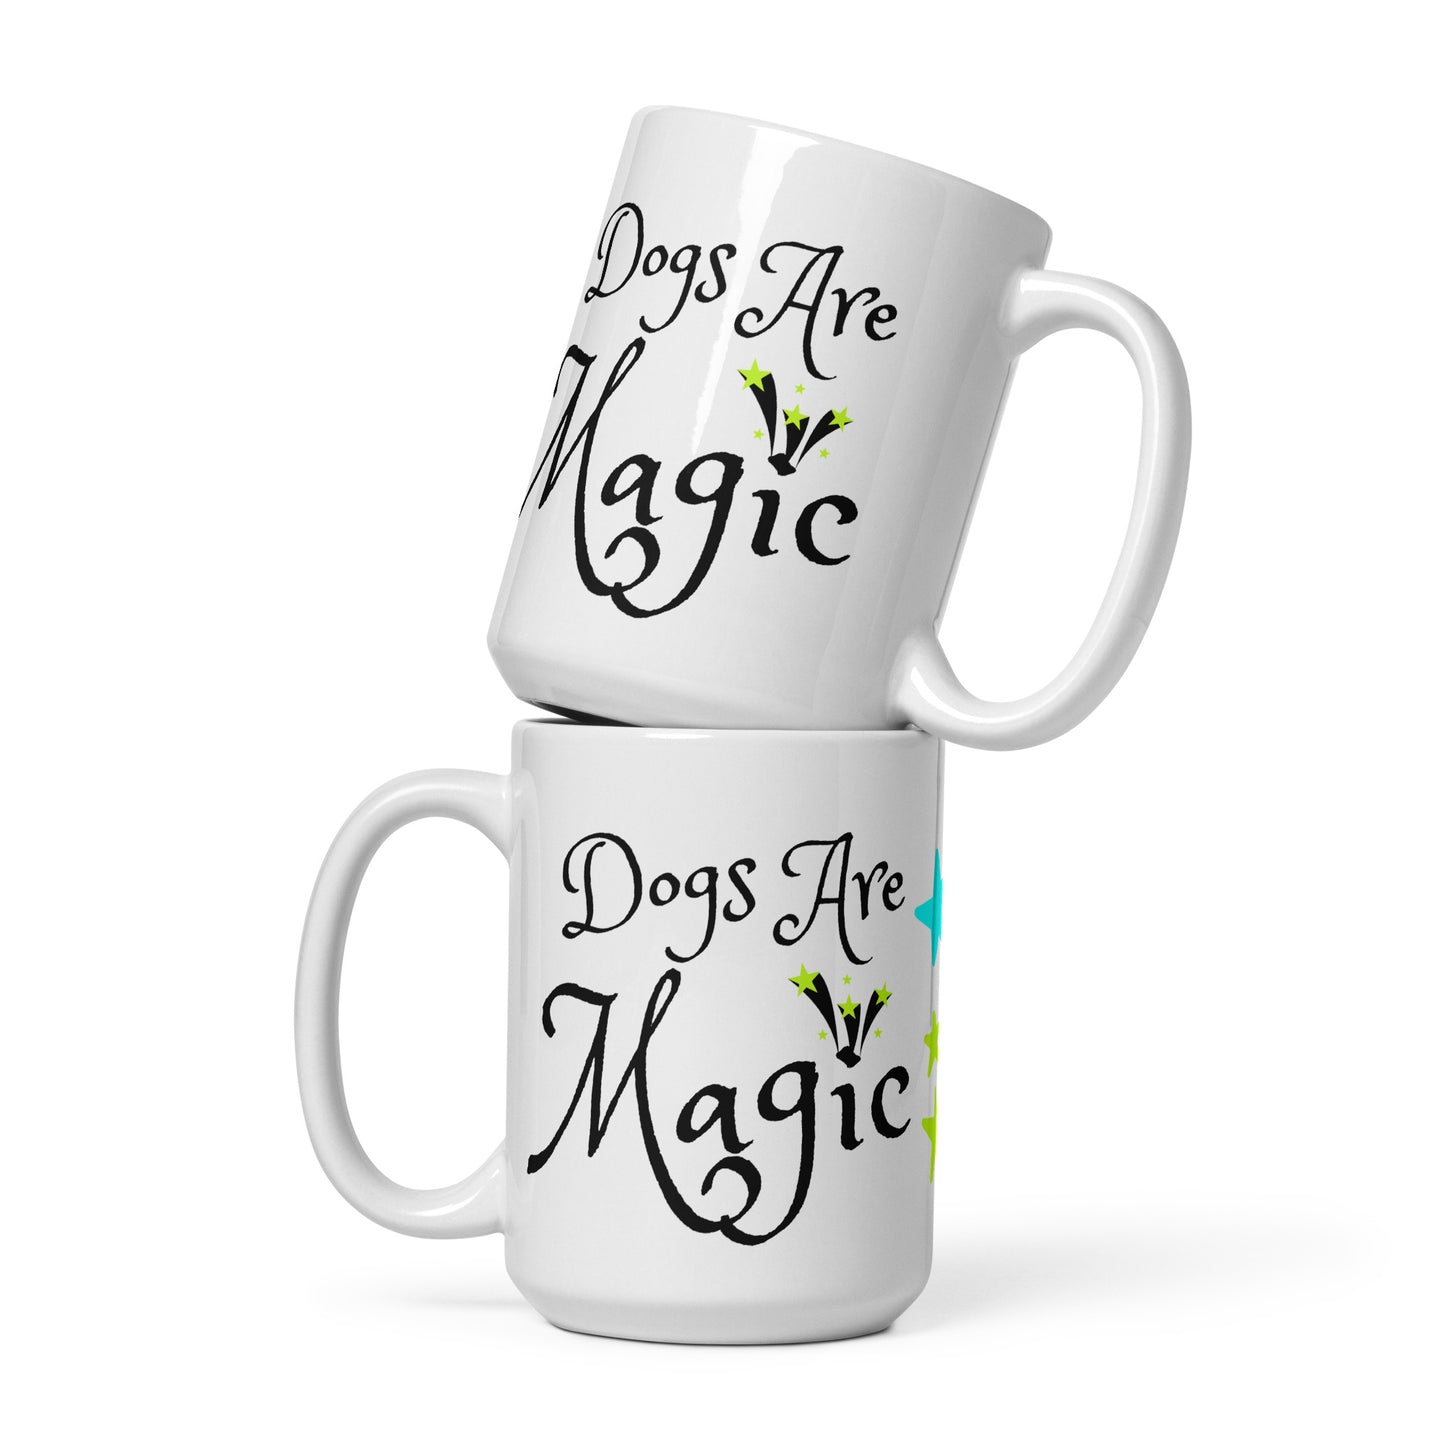 Dogs Are Magic - Dog Lovers Mug